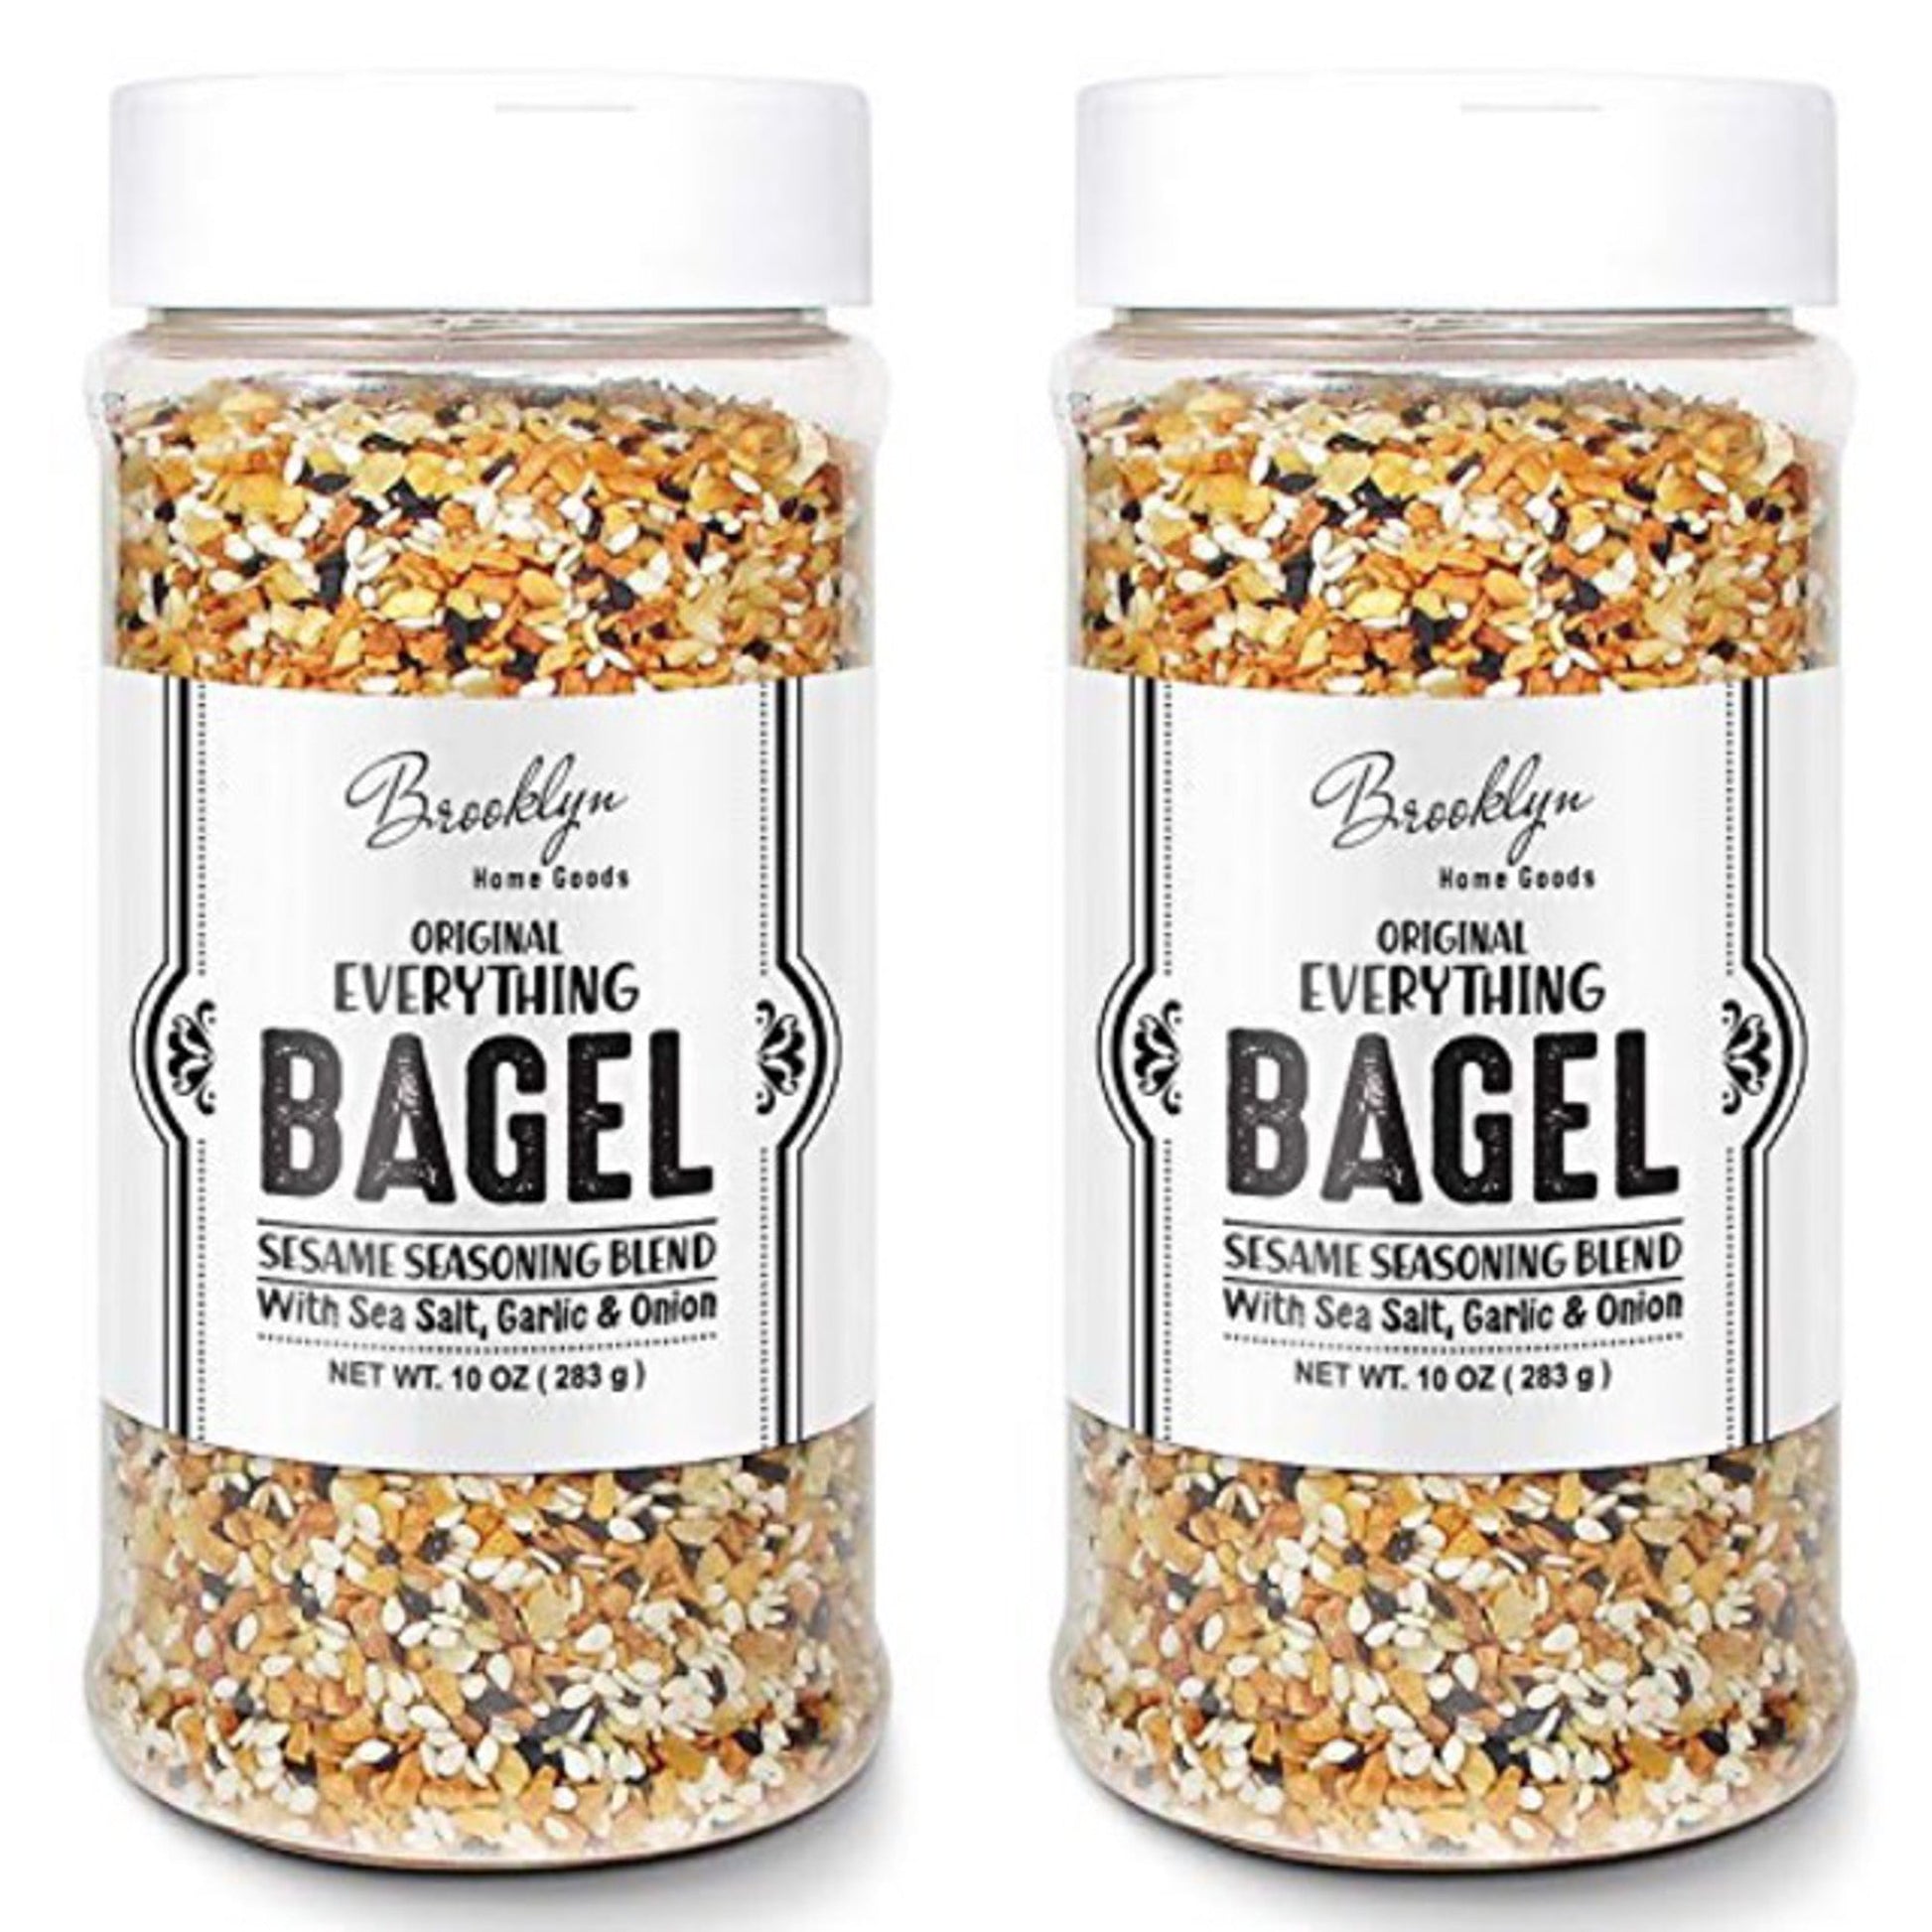 Everything Bagel American Seasoning Mix,Blend with Onion Flaks, Garlic  100gm x 2